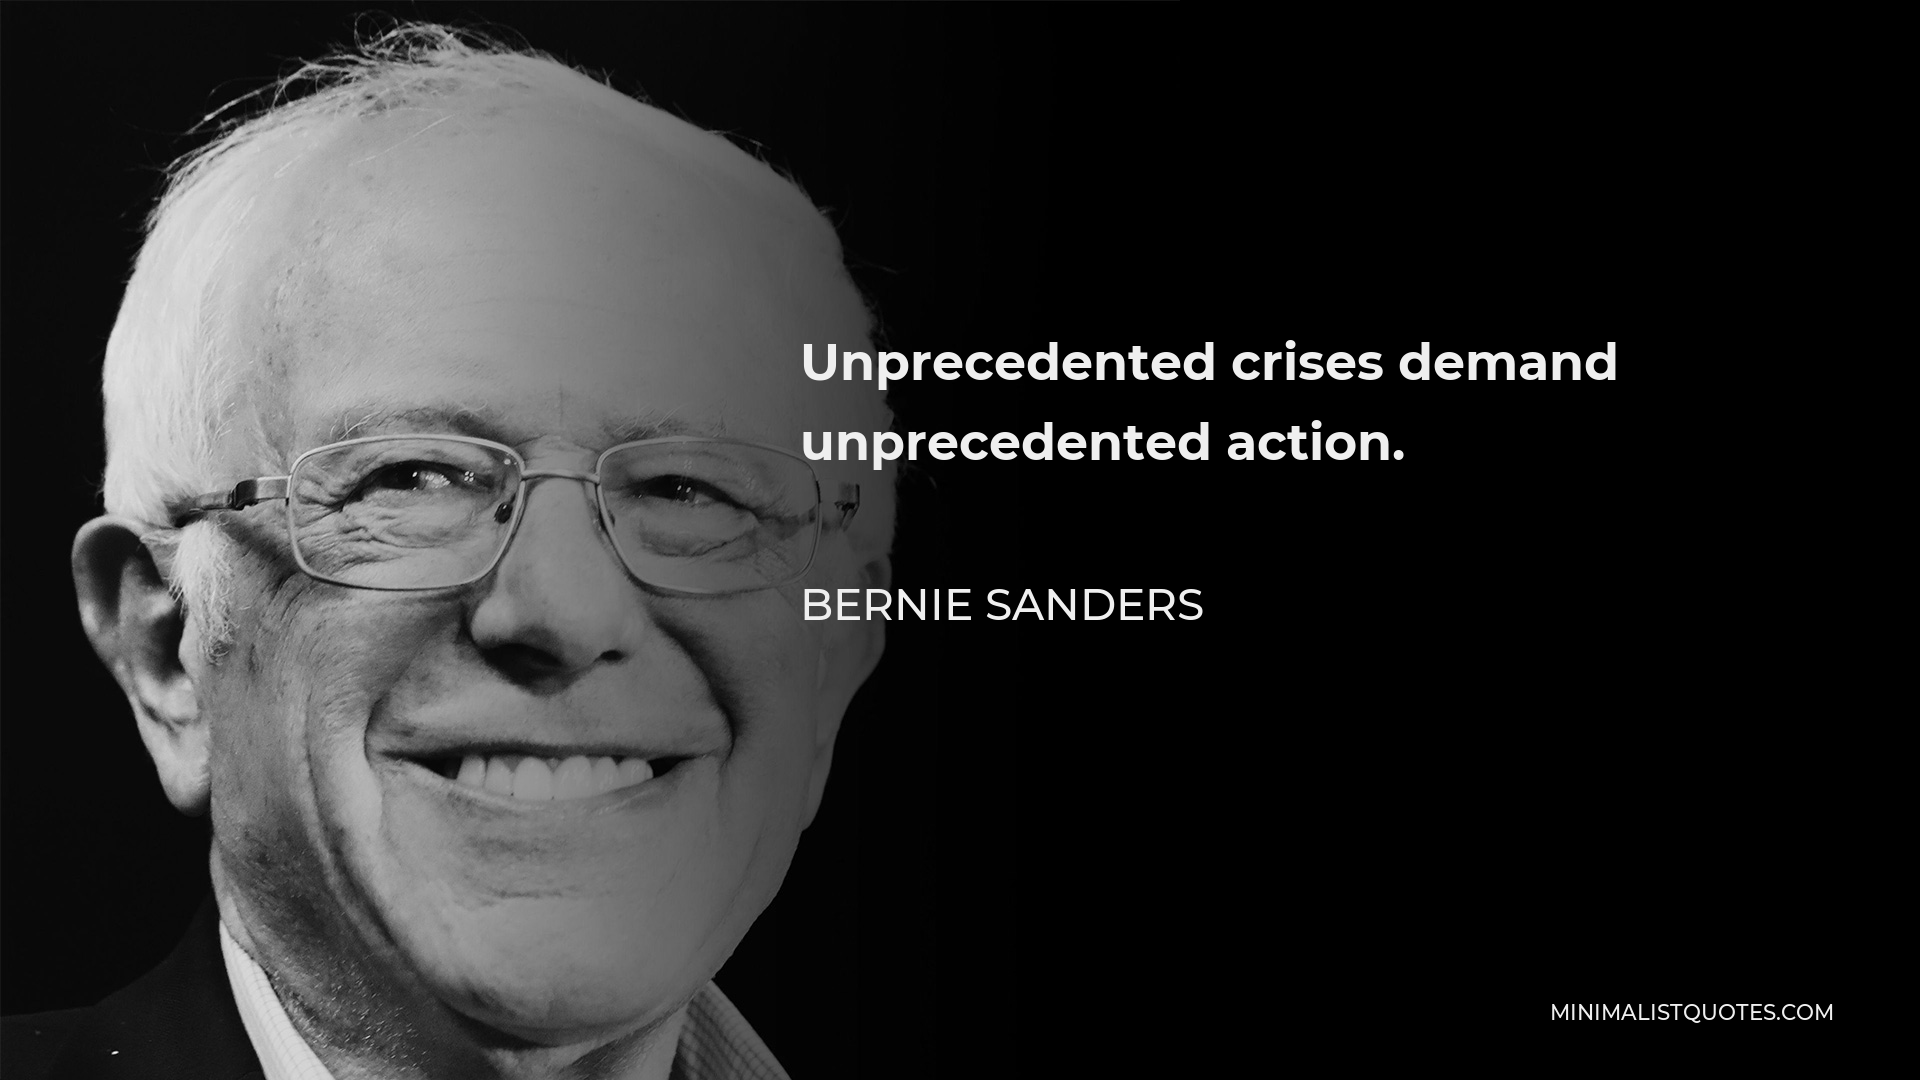 Bernie Sanders Quote - Unprecedented crises demand unprecedented action.